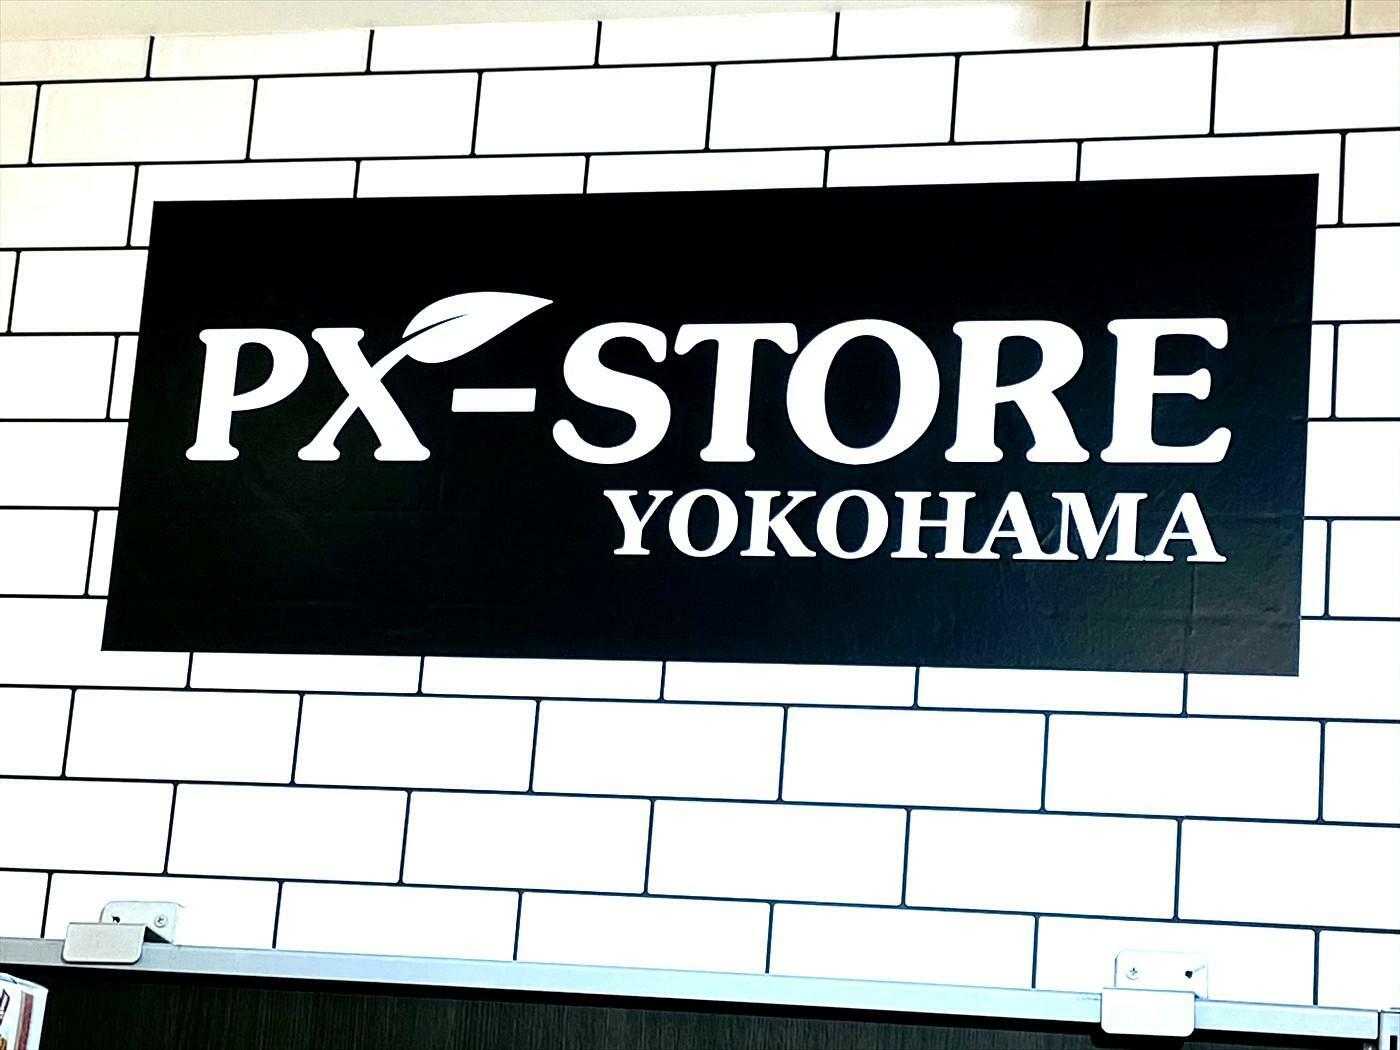 PX-STORE YOKOHAMA